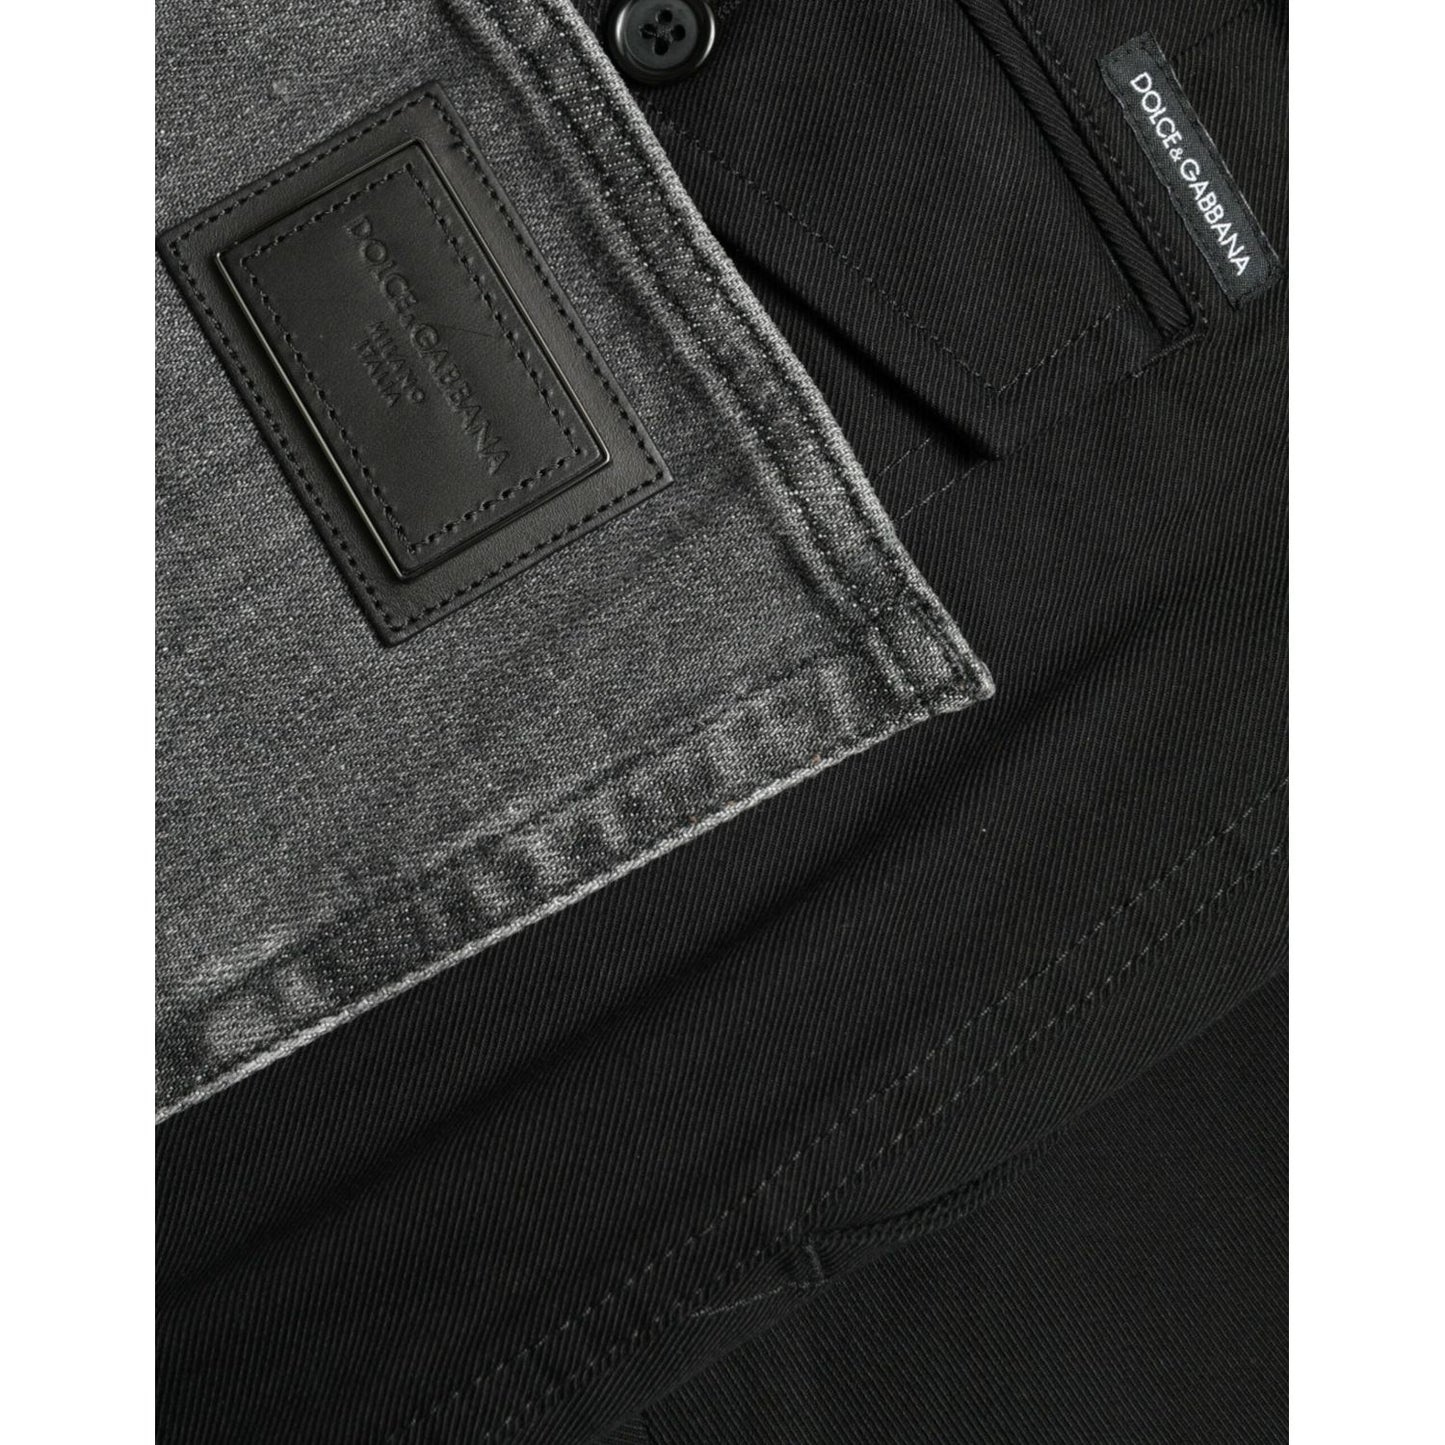 Dolce & Gabbana Elegant Cotton Stretch Jogger Pants black-gray-slim-cotton-denim-jeans